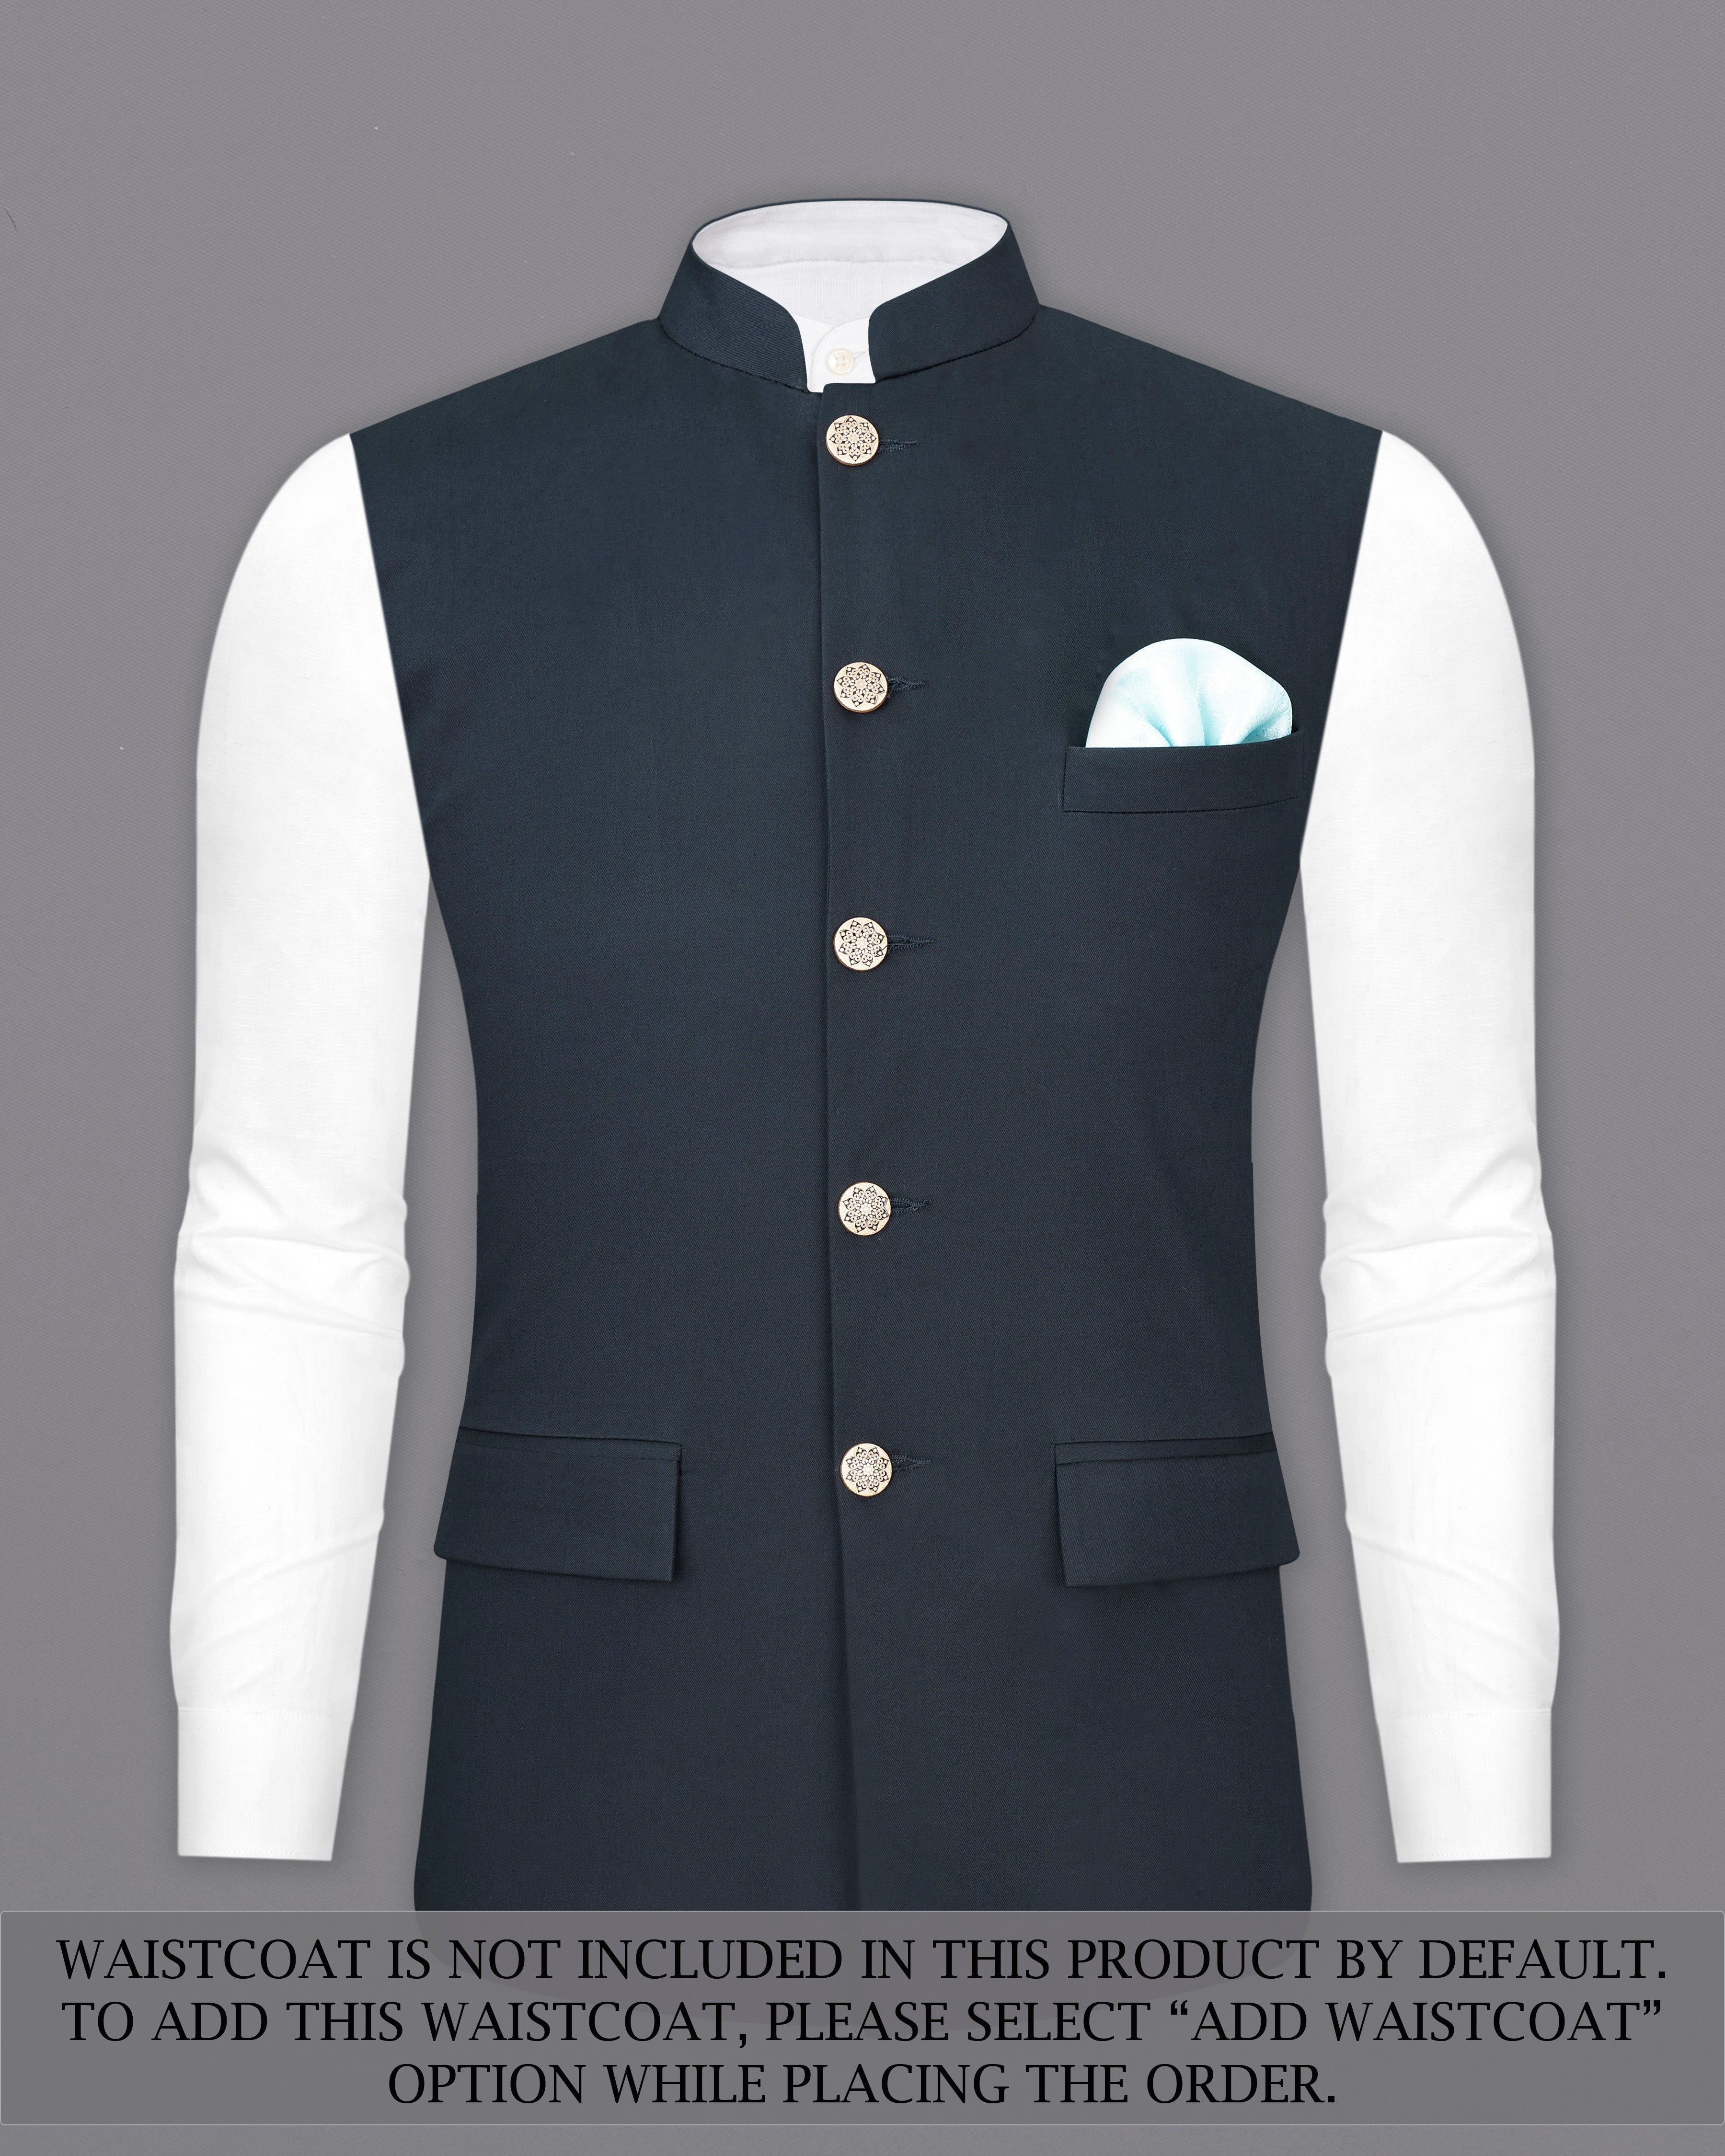 Tuna Blue Premium Cotton Bandhgala Jodhpuri Suit